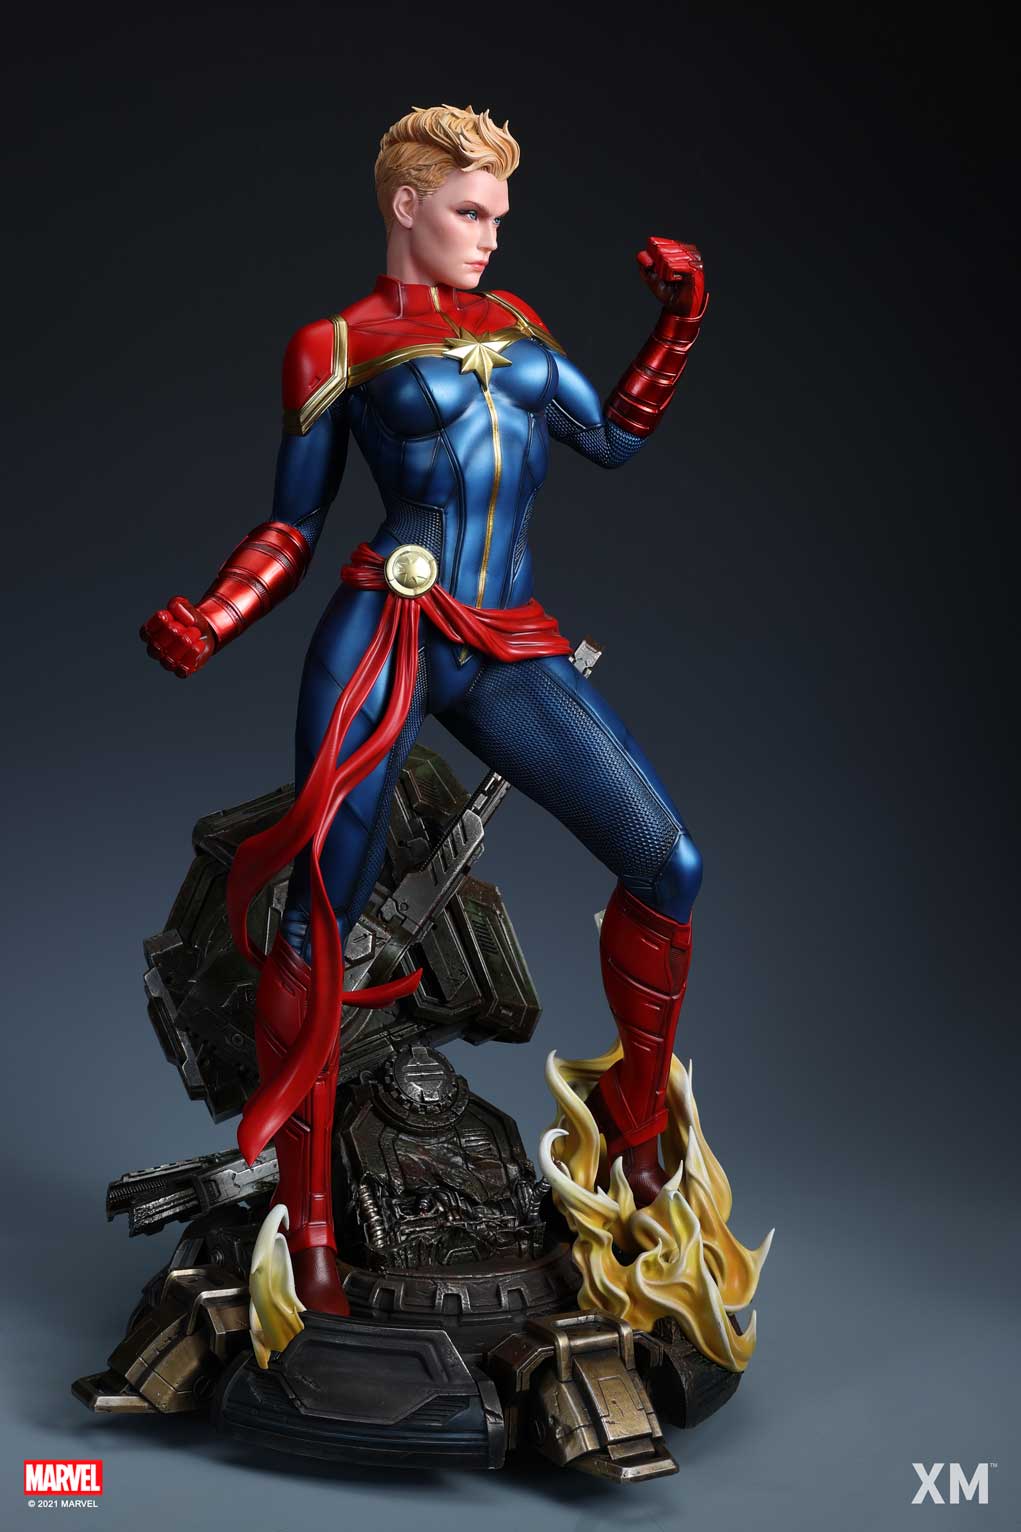 Marvel: Captain Marvel 1:4 Scale Statue - Hobby One